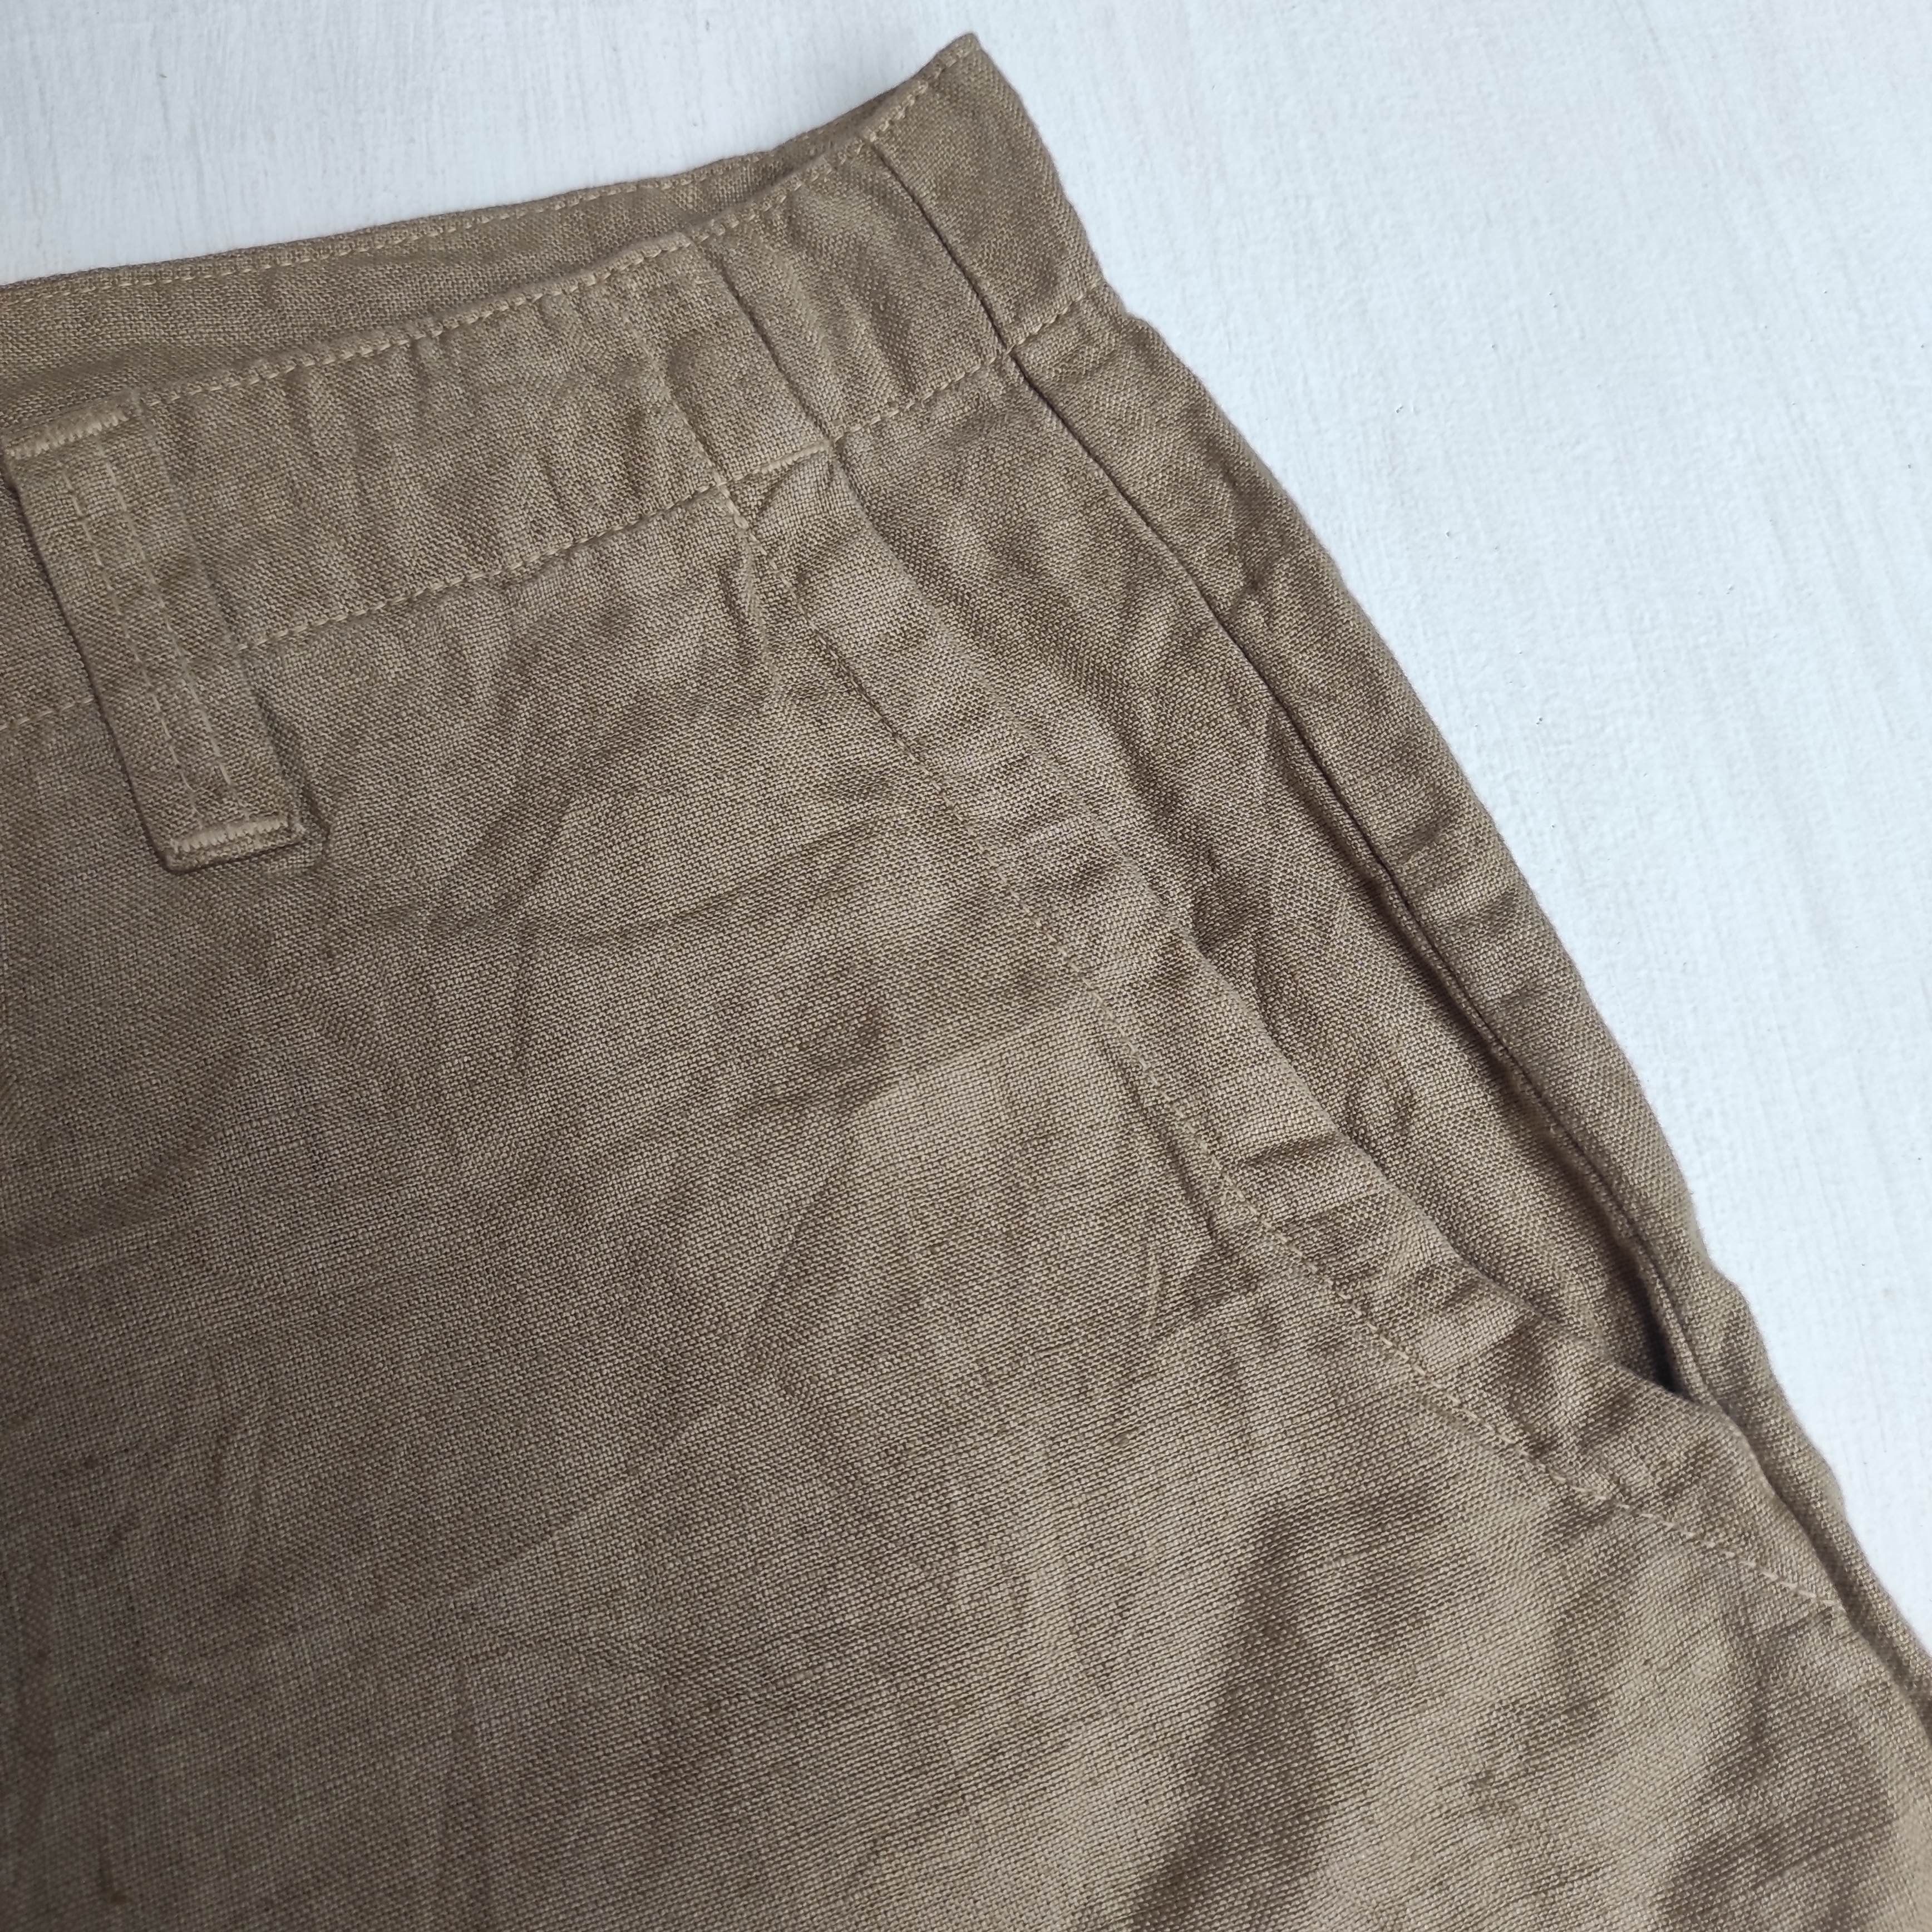 Vintage Vintage John Bull Linen Pants Size US 34 / EU 50 - 6 Thumbnail